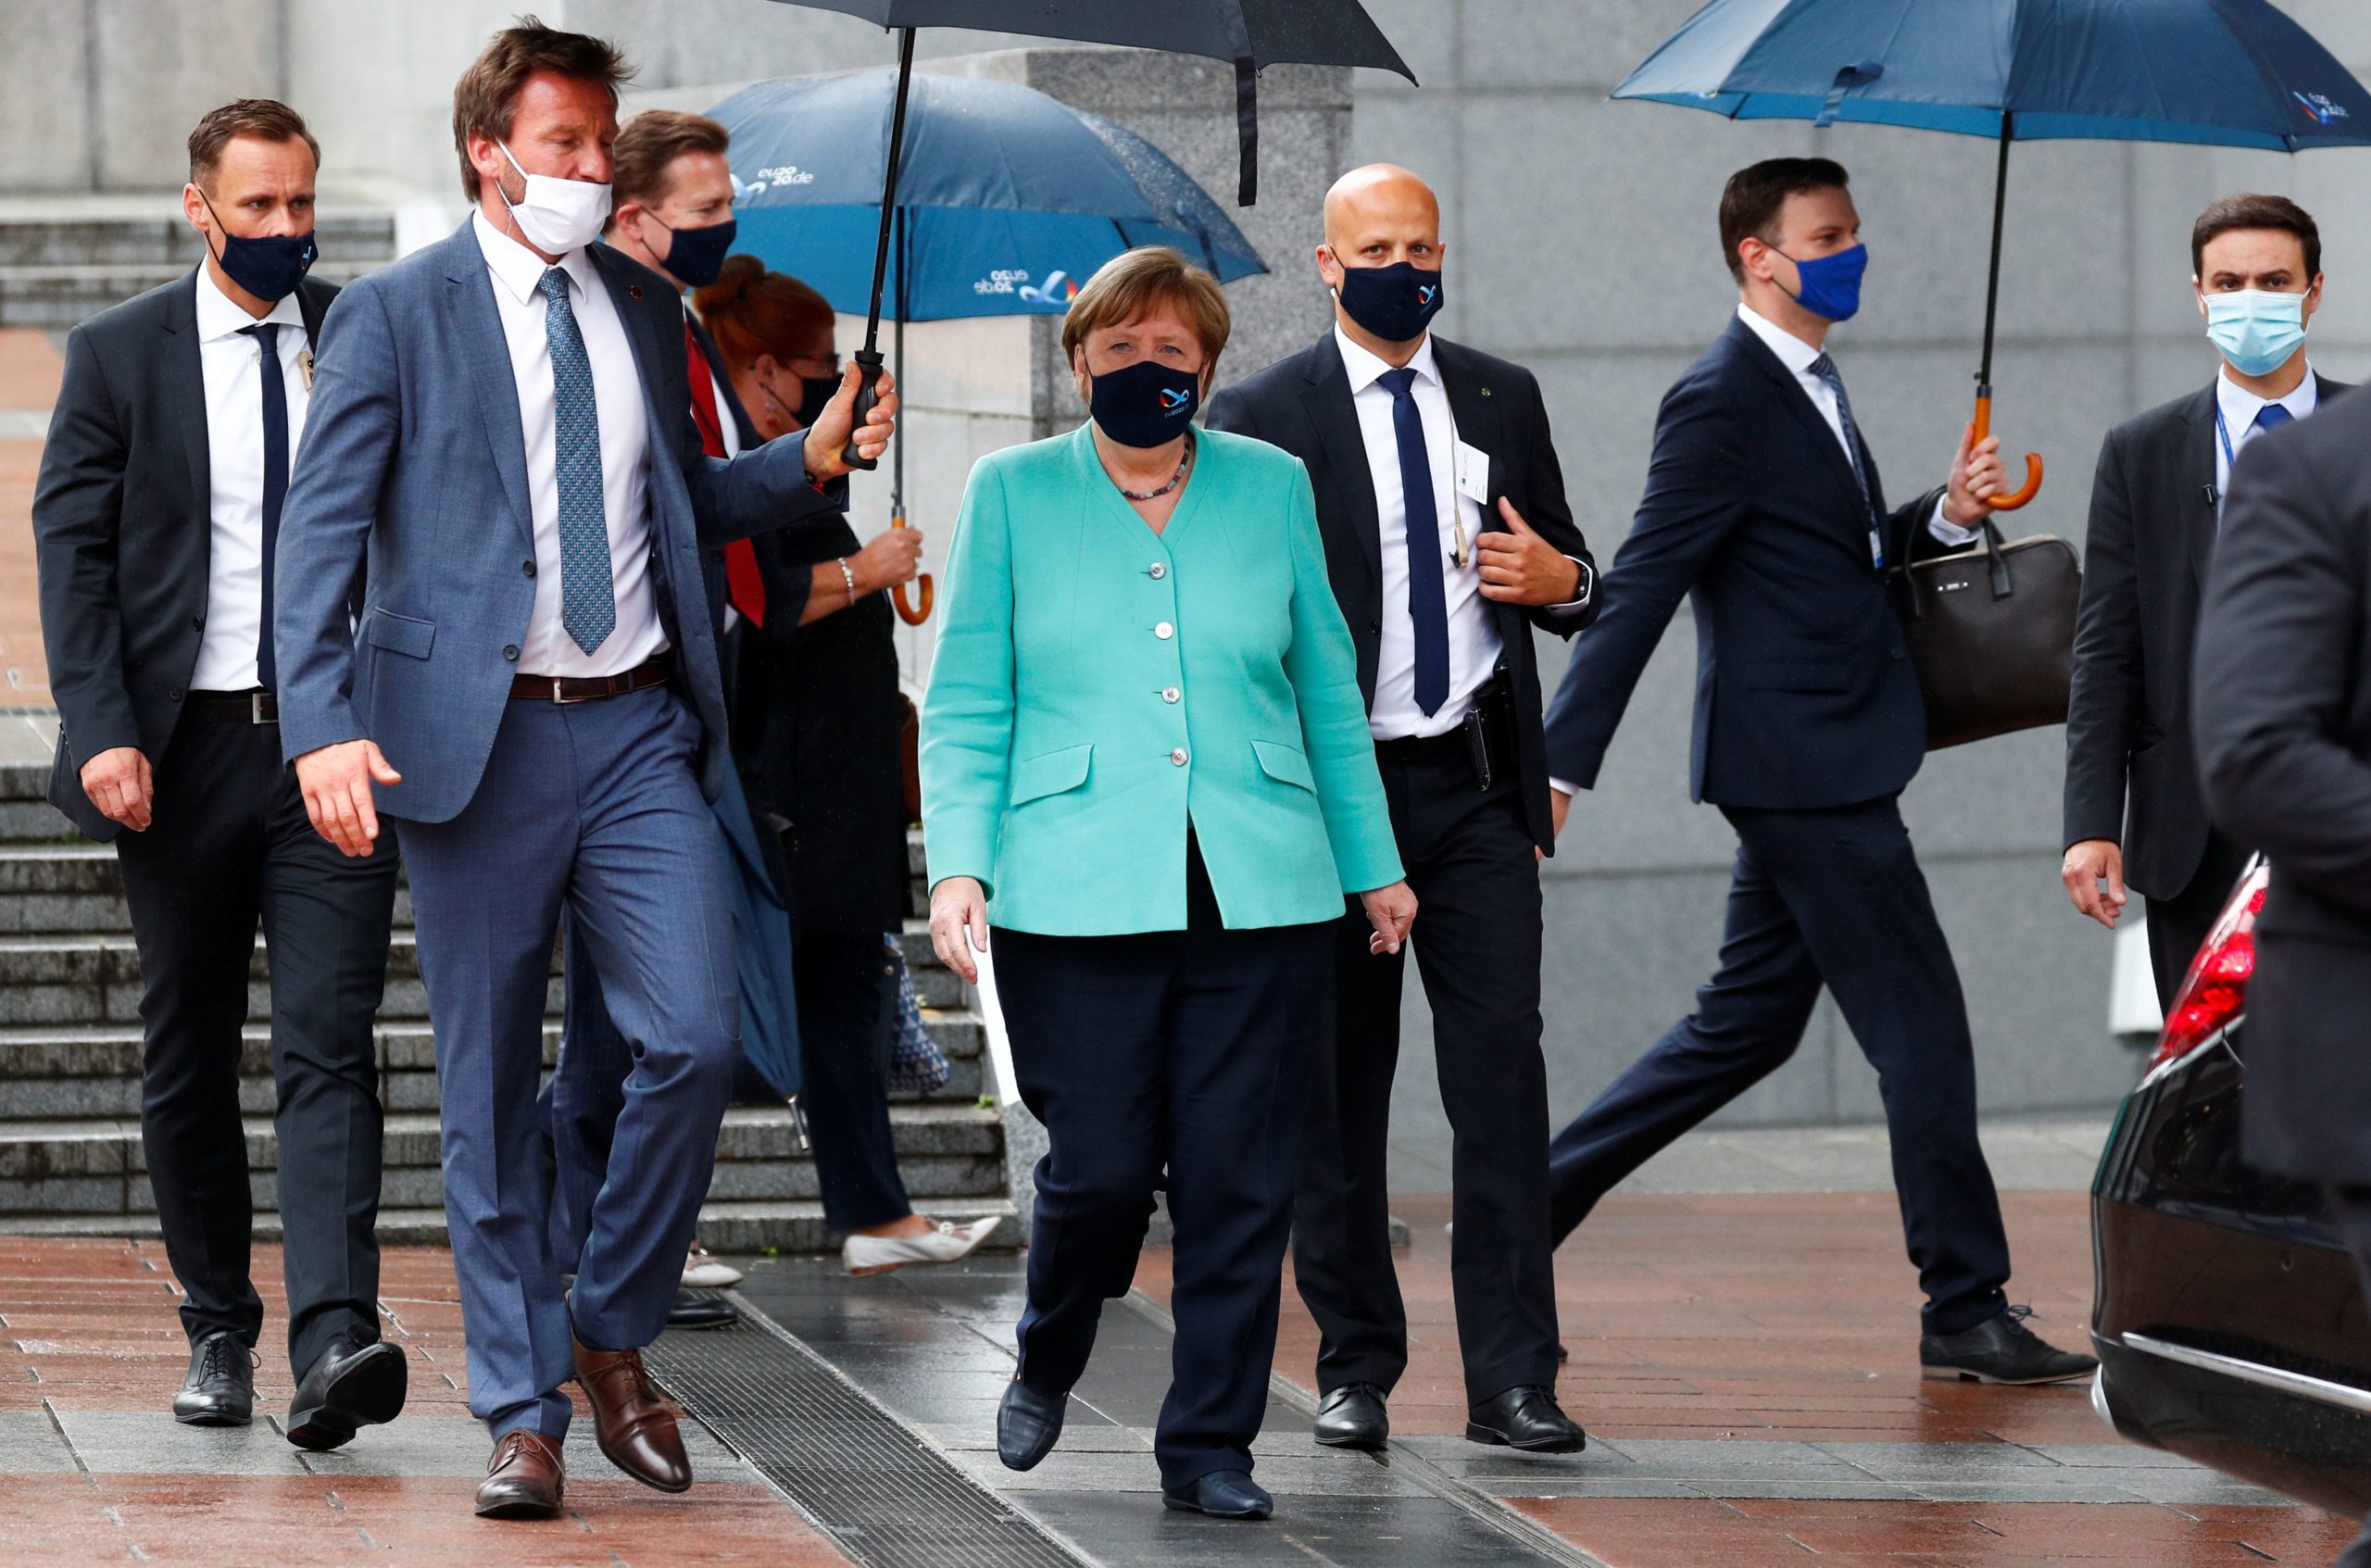 German Chancellor Angela Merkel leaves the European Parliament after attending a plenary session  in Brussels, Belgium July 8, 2020. REUTERS/Francois Lenoir